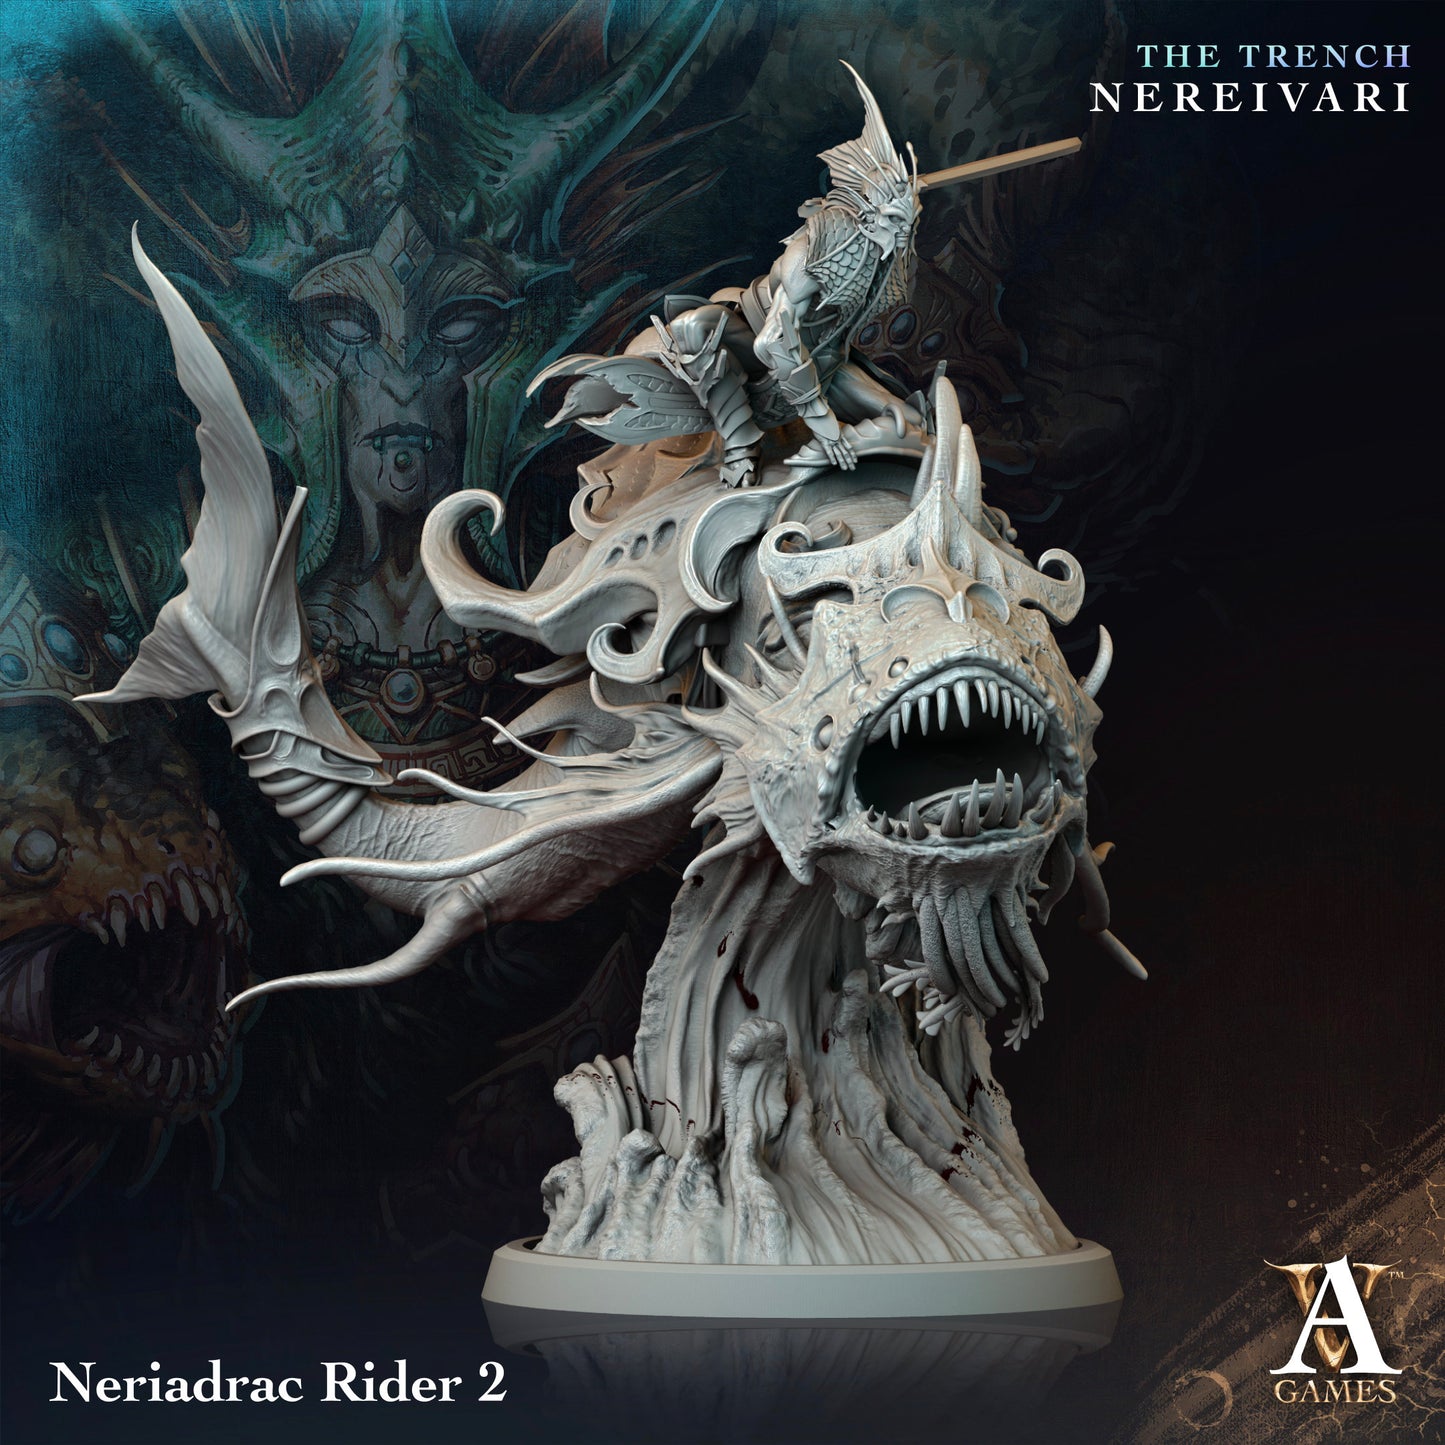 Neriadrac Rider -The Trench - Nereivari (copia)